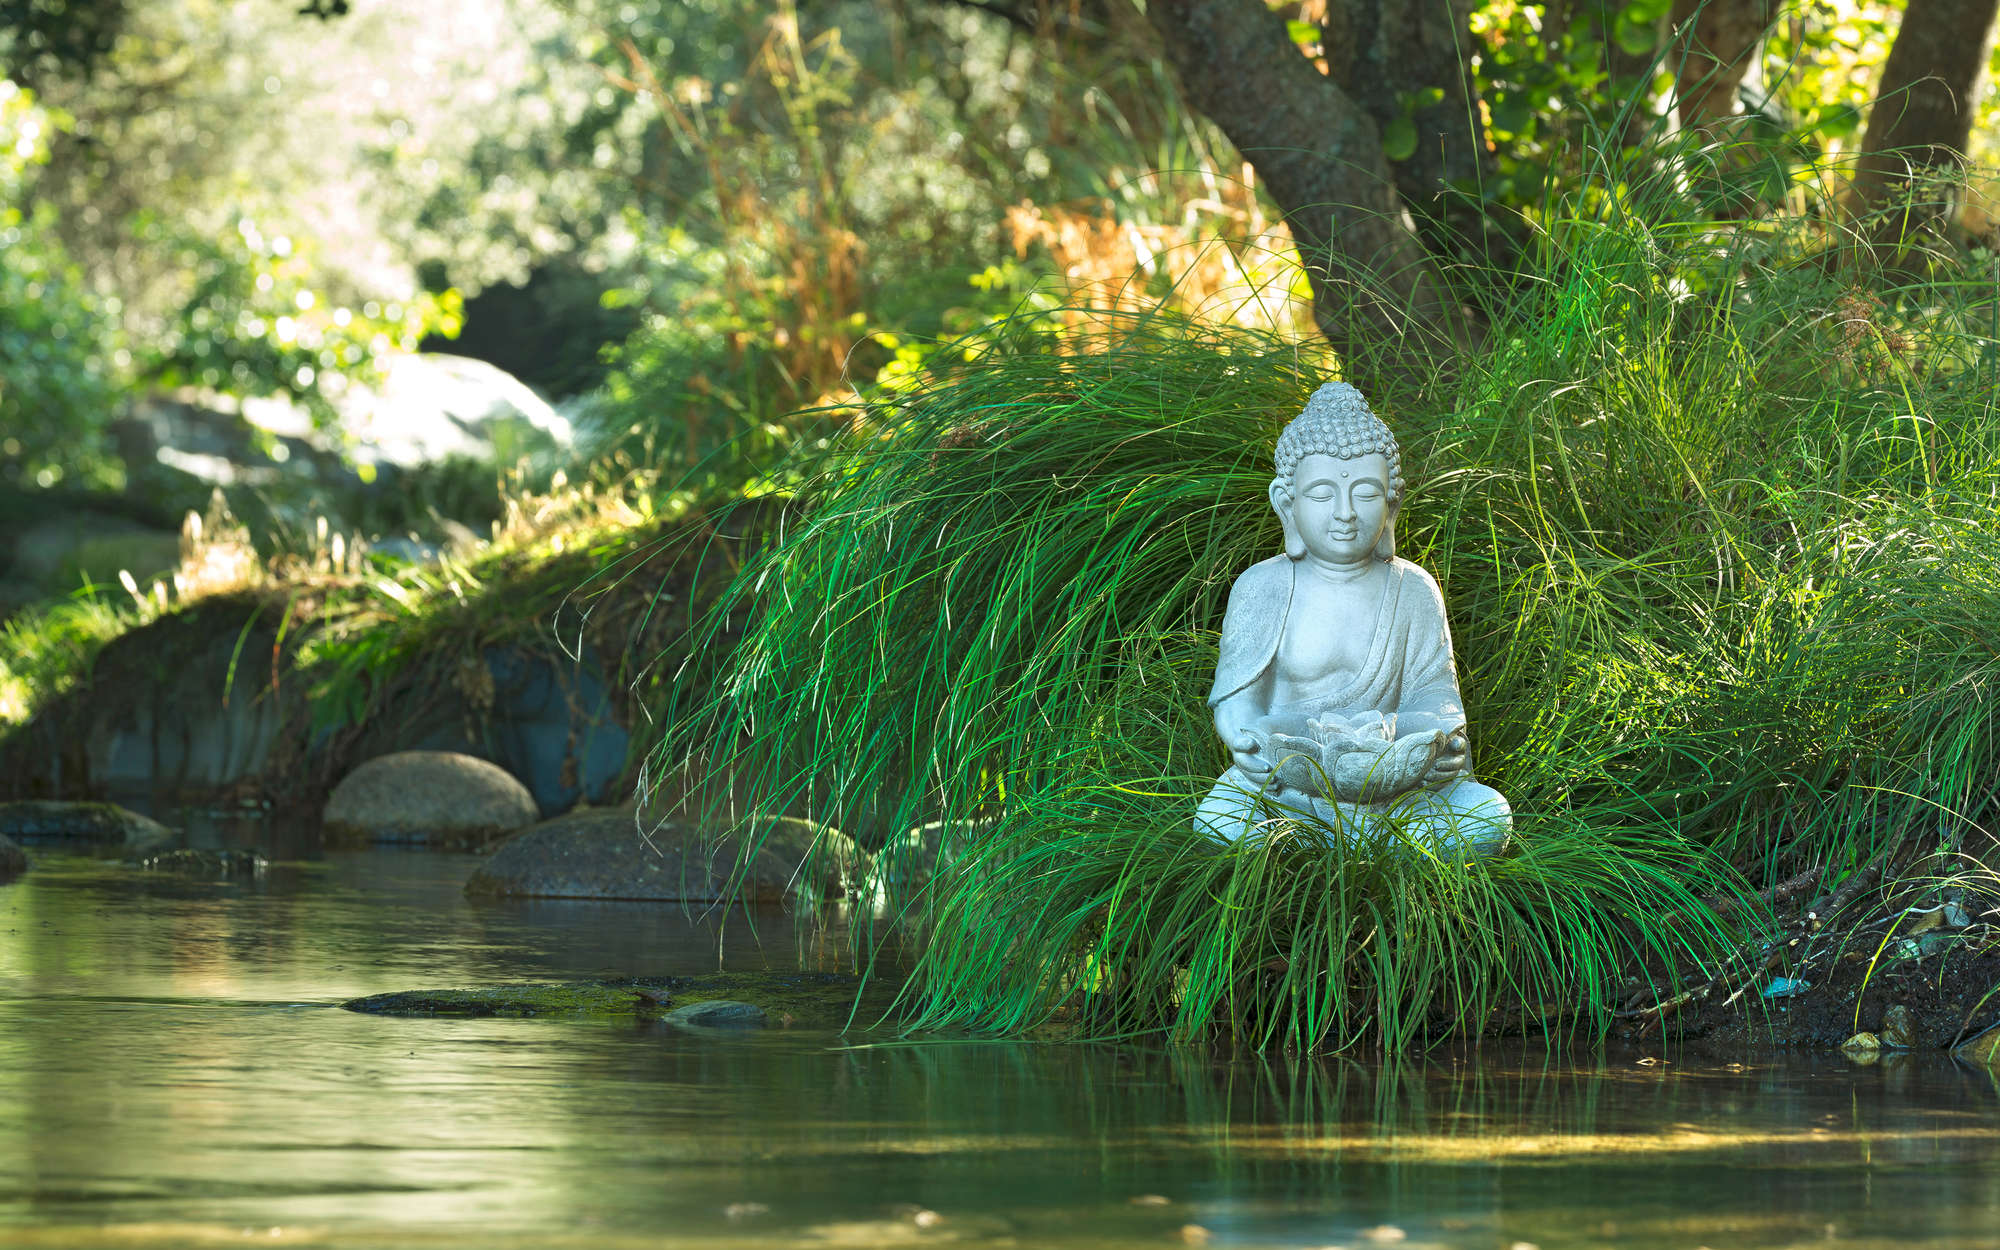             Fototapete Buddha-Statue am Flussufer – Mattes Glattvlies
        